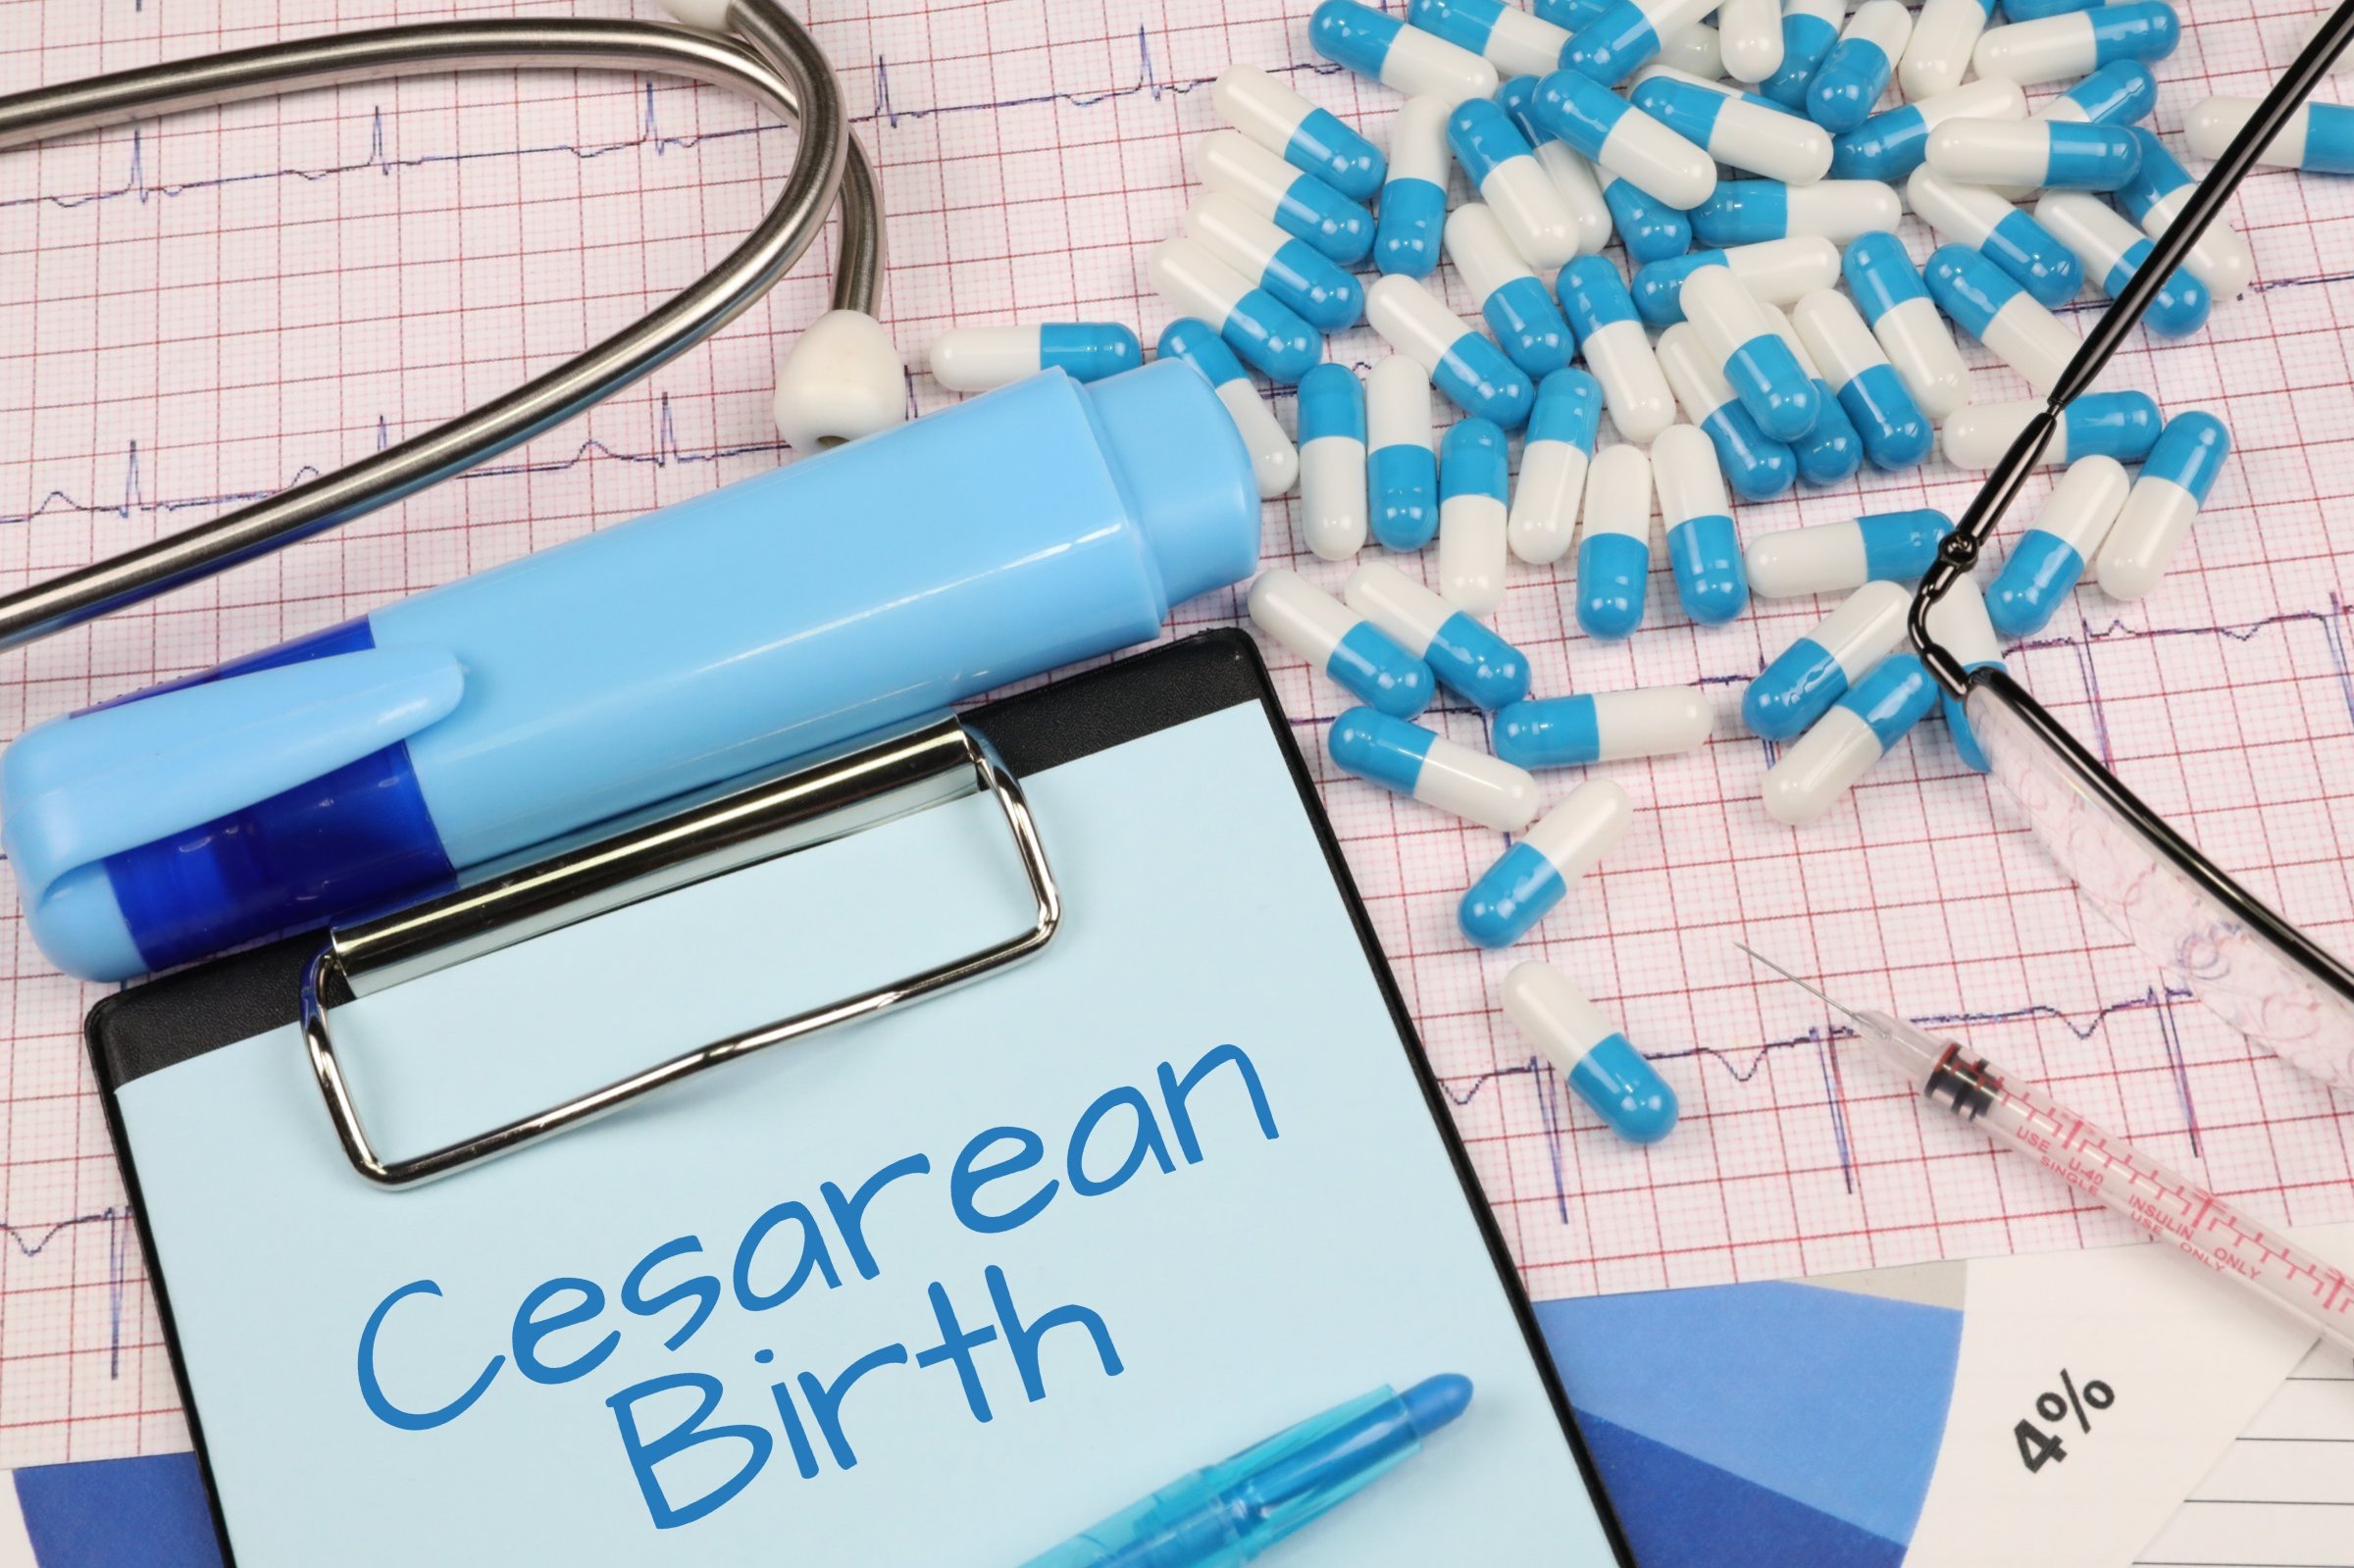 cesarean birth